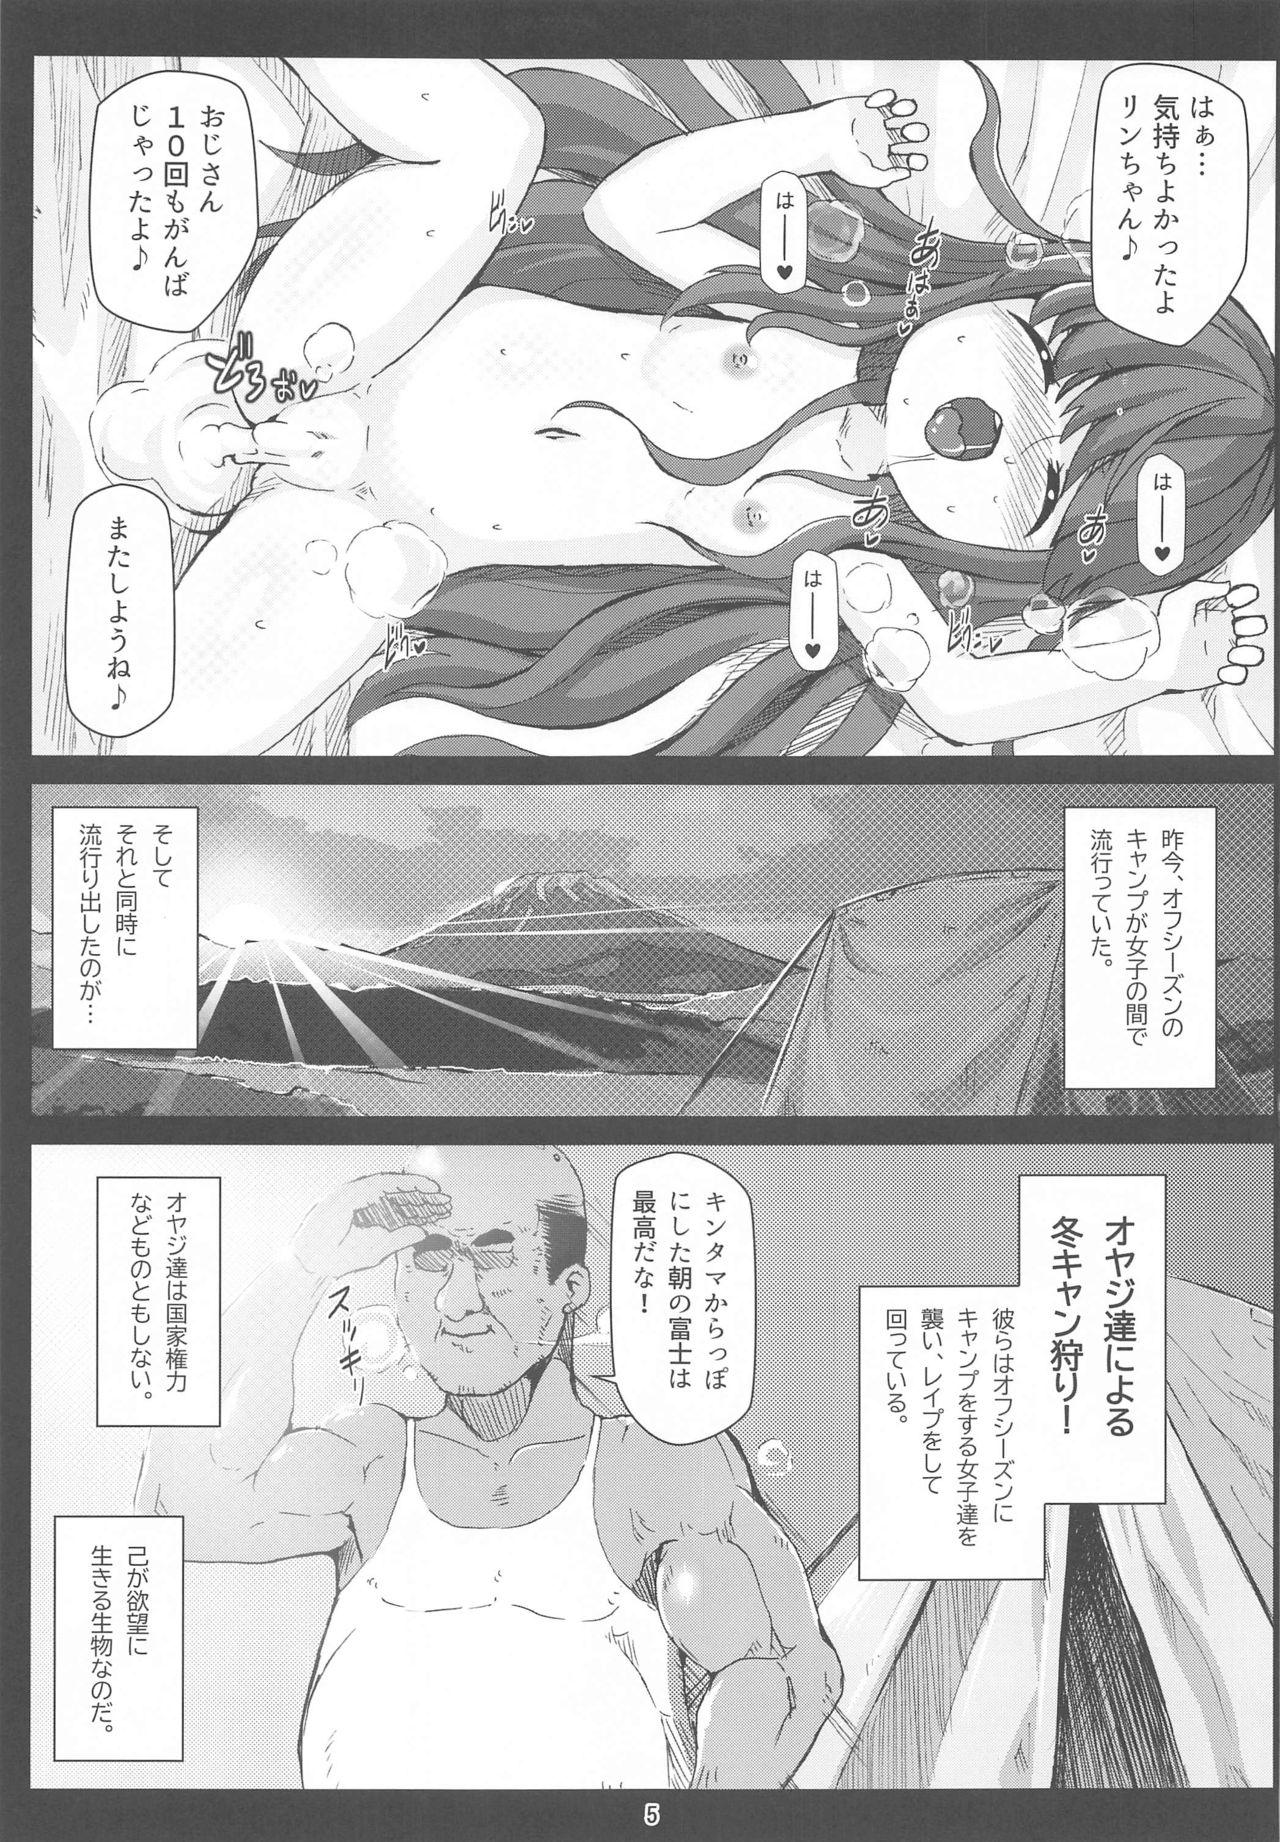 Passion Bote Camp - Yuru camp Sucks - Page 4